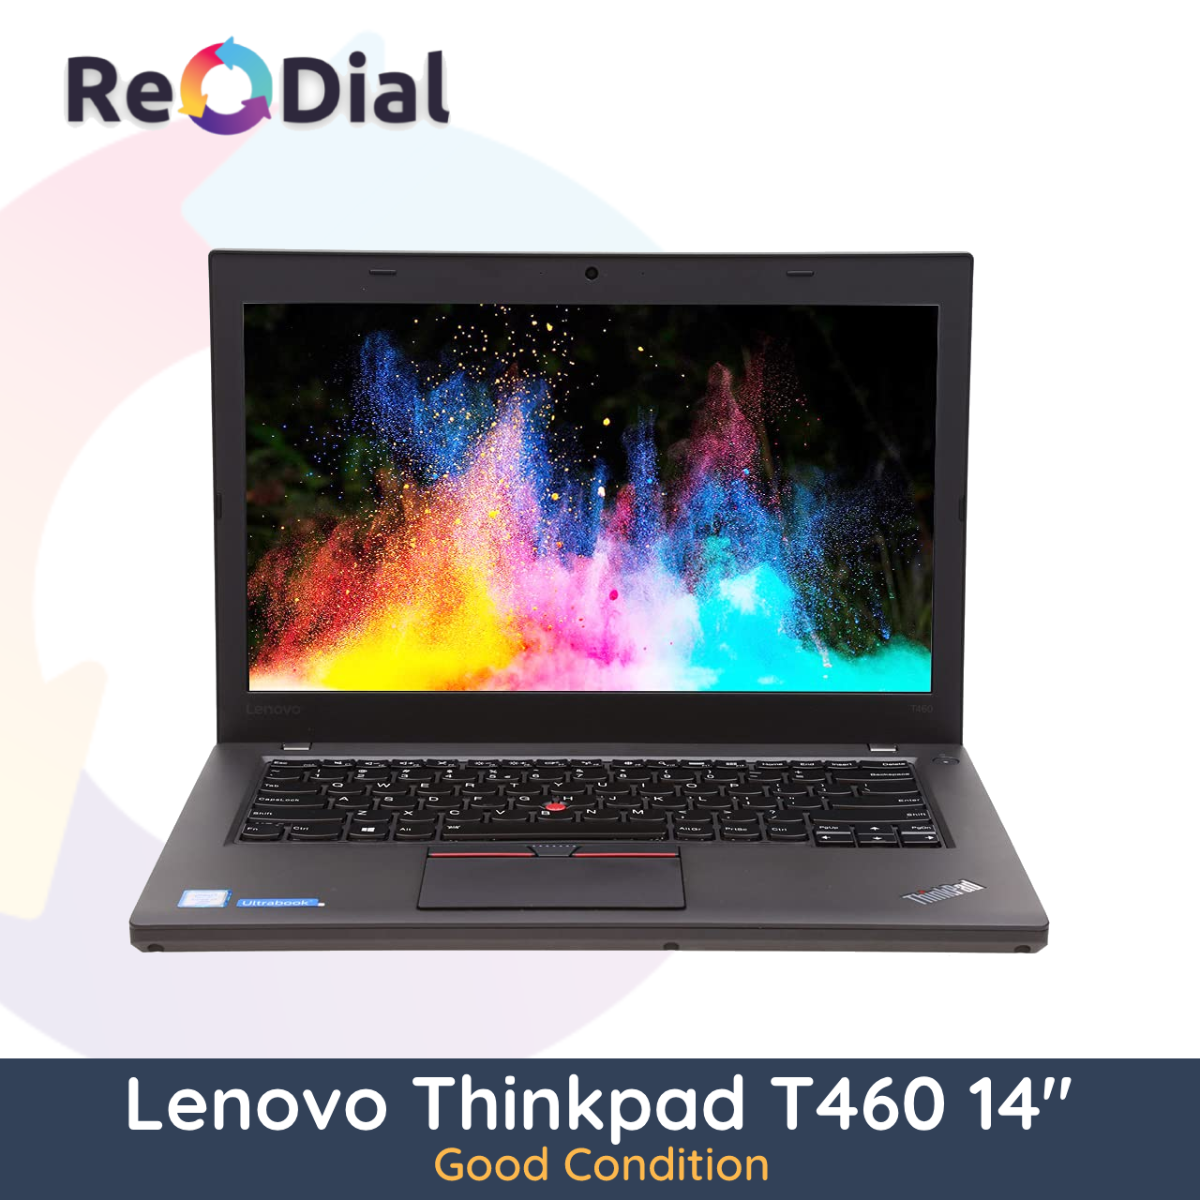 Lenovo ThinkPad T460 14" i5-6300U 512GB 8GB RAM - Good Condition